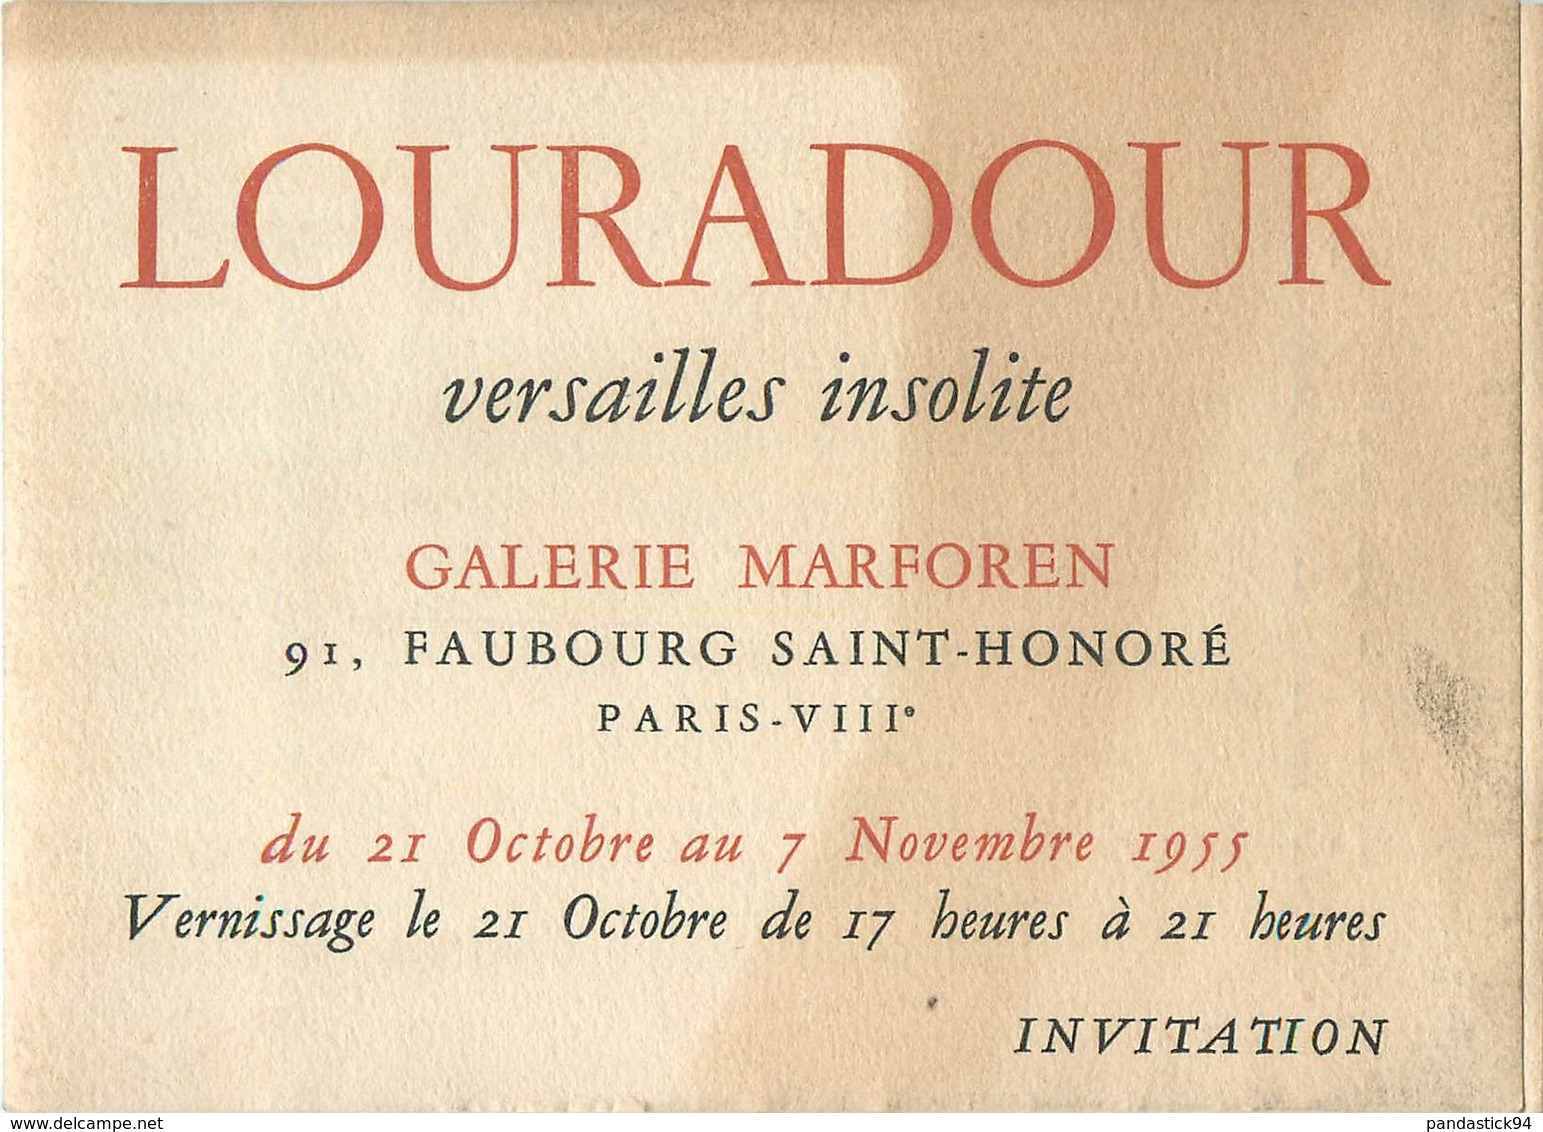 VIEUX PAPIERS PARIS IIIe PUBLICITE LOURADOUR VERSAILLES INSOLITE GALERIE MARFOREN 1955  ETAT VOIR IMAGES - Colecciones